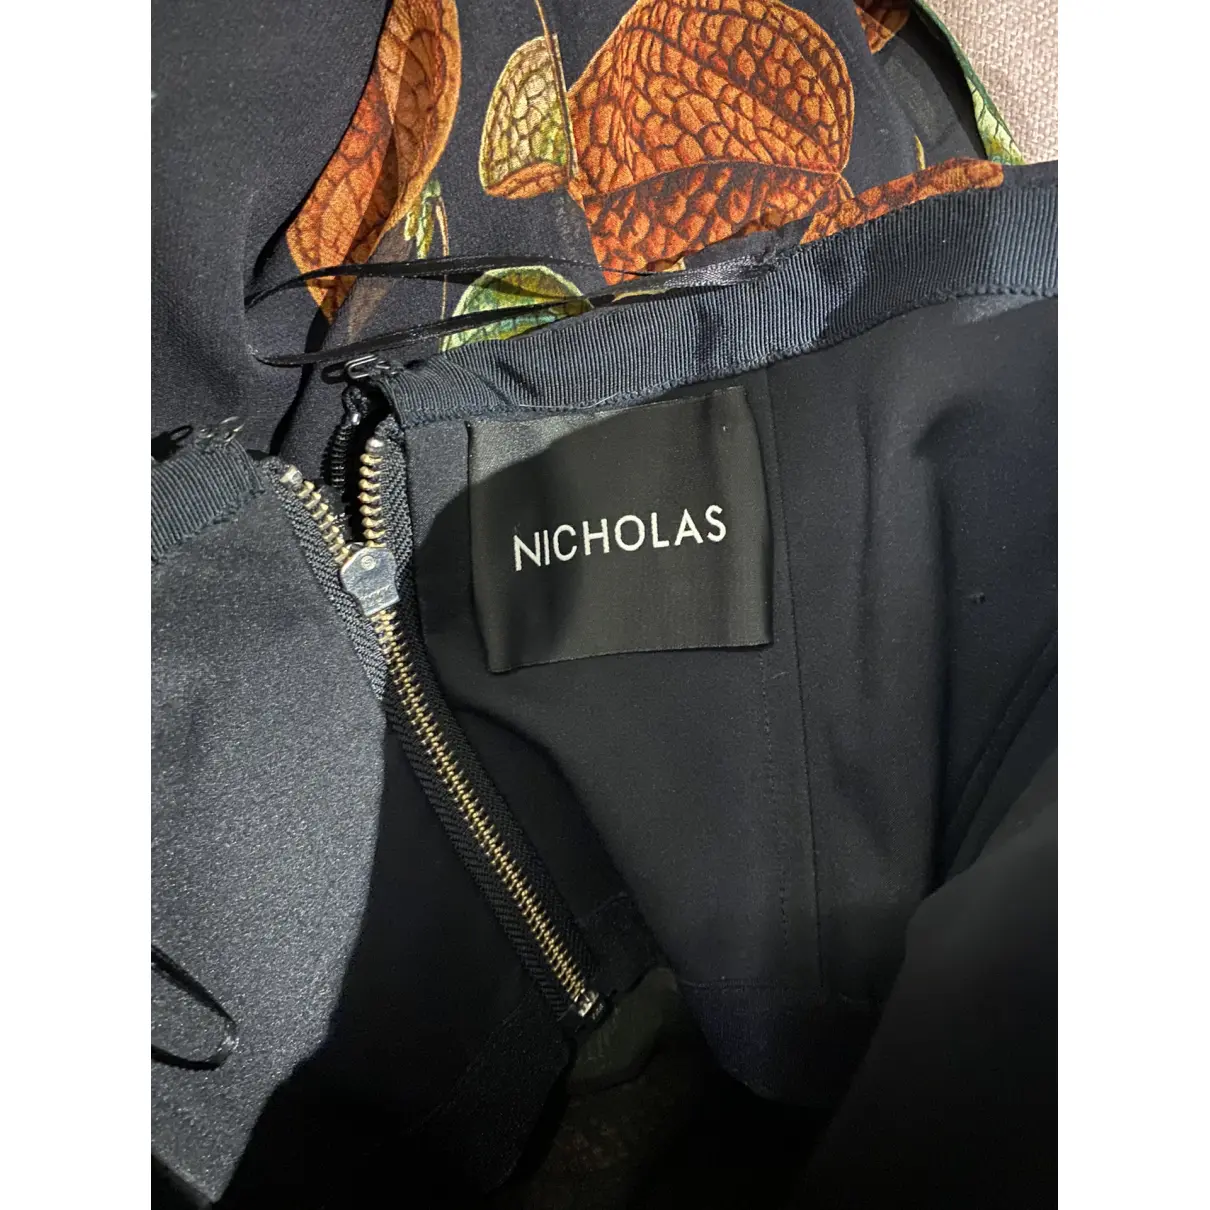 Buy Nicholas Silk jumpsuit online